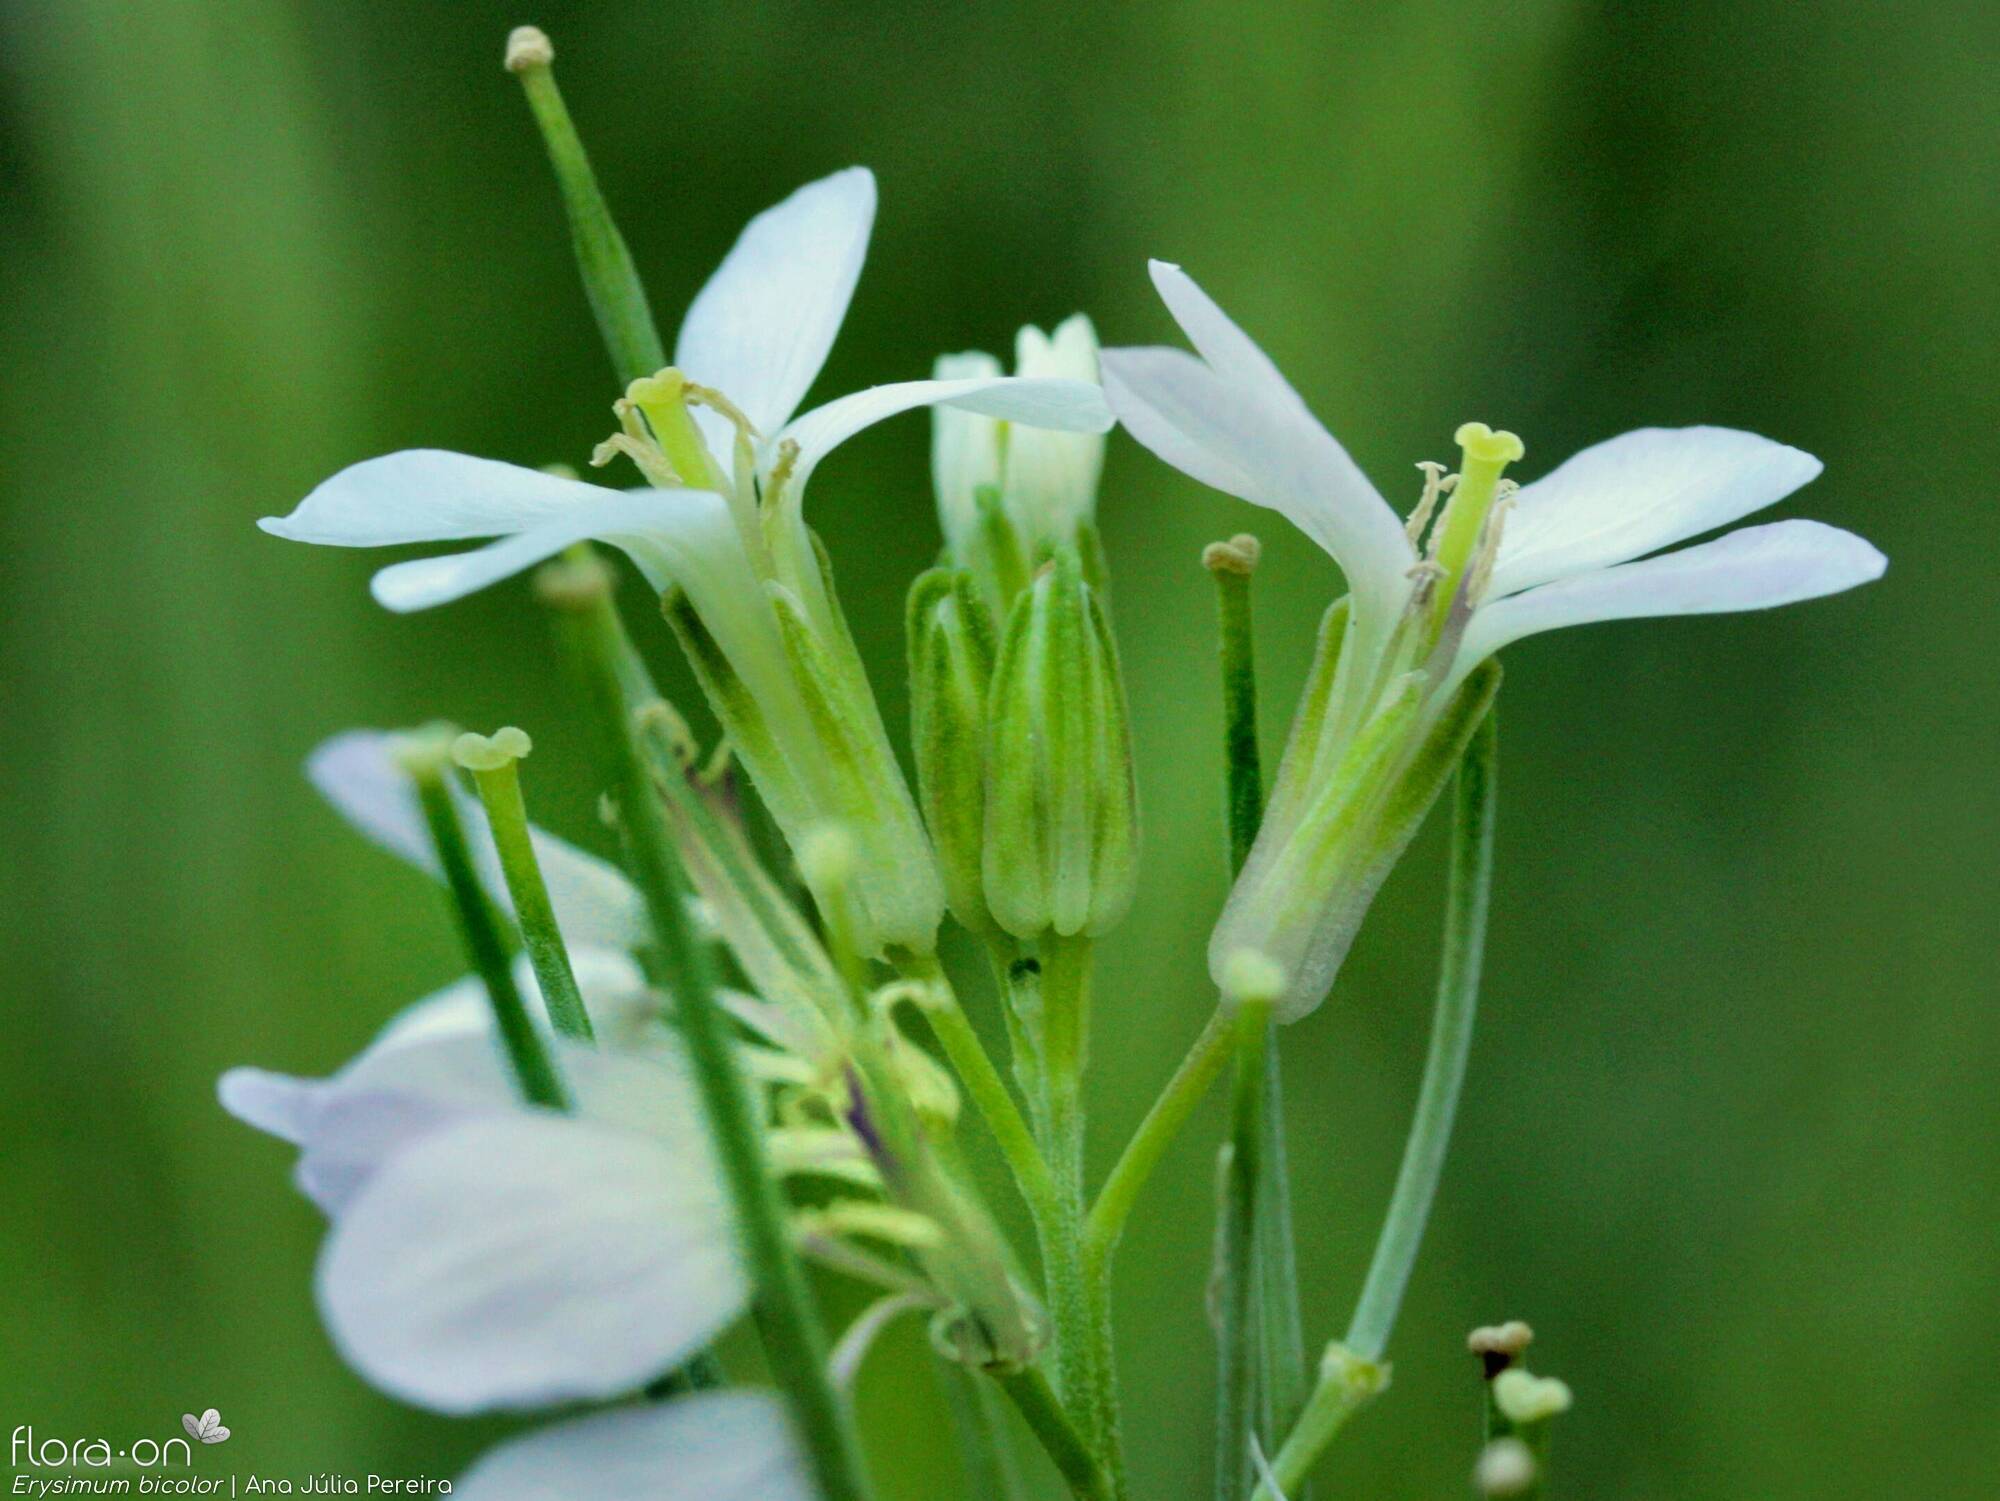 Erysimum bicolor - Flor (close-up) | Ana Júlia Pereira; CC BY-NC 4.0